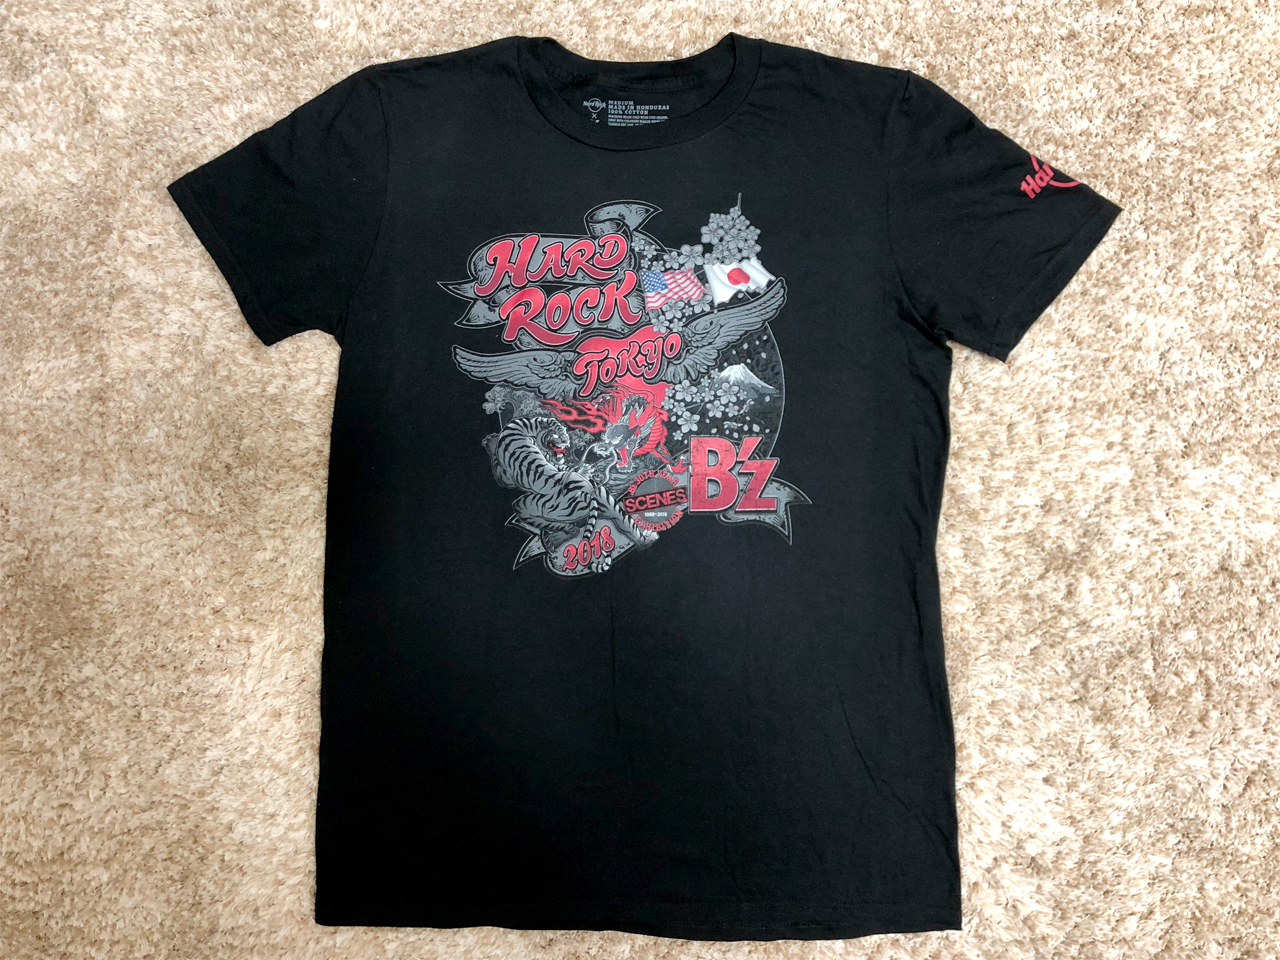 B'z × Hard Rock Cafe “Tシャツ”コラボグッズレビュー・感想 裾 